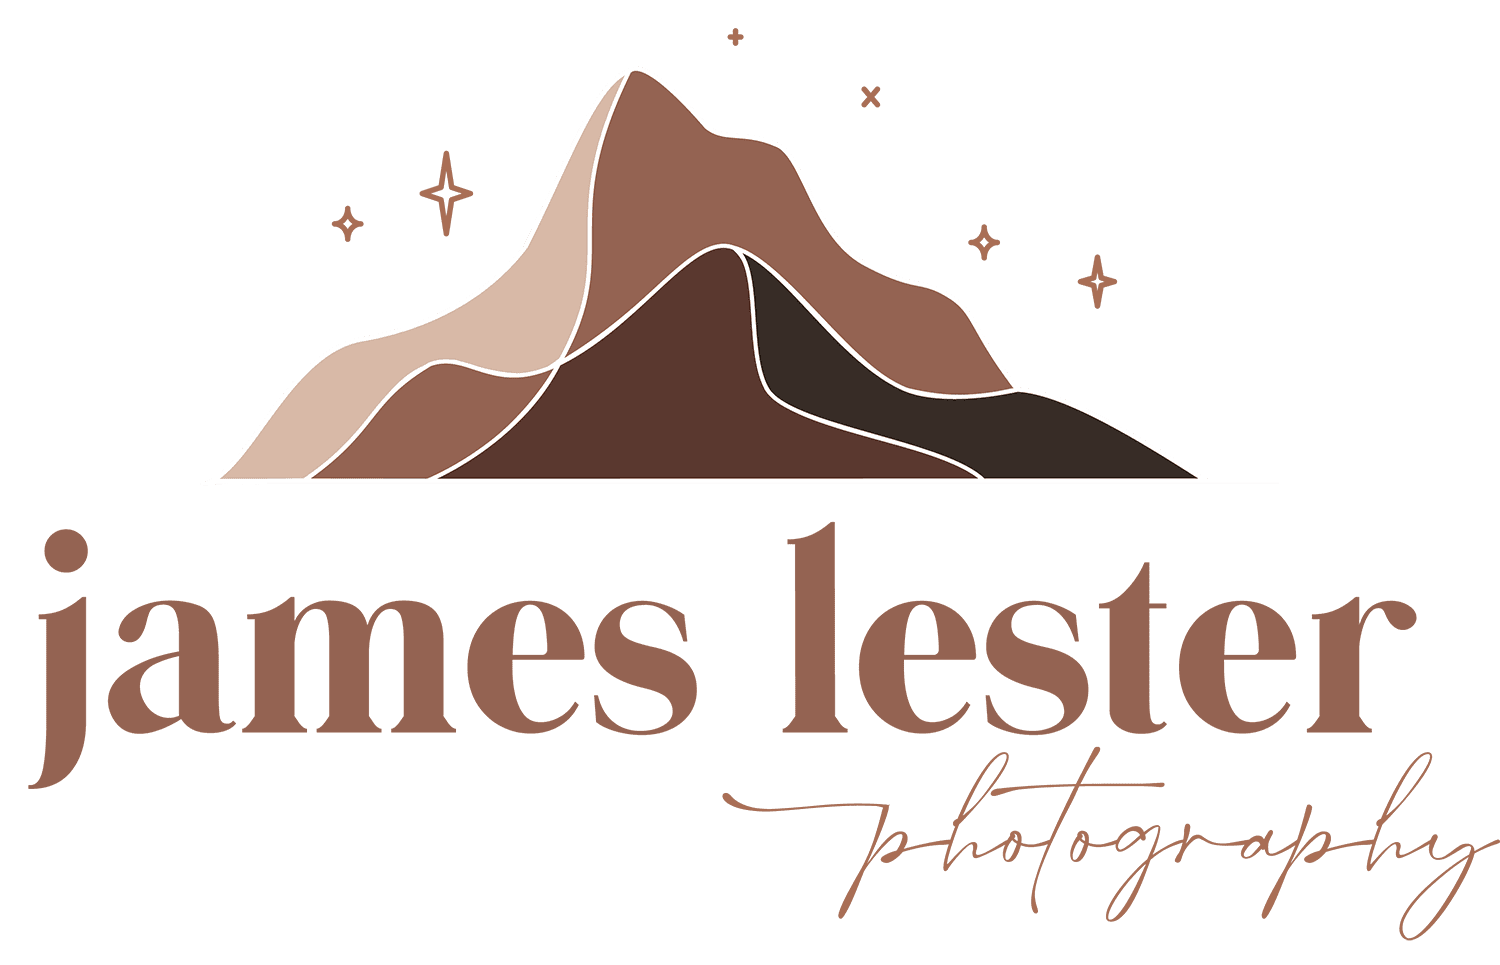 james-lester-photography-logo-skin-tone-mountains